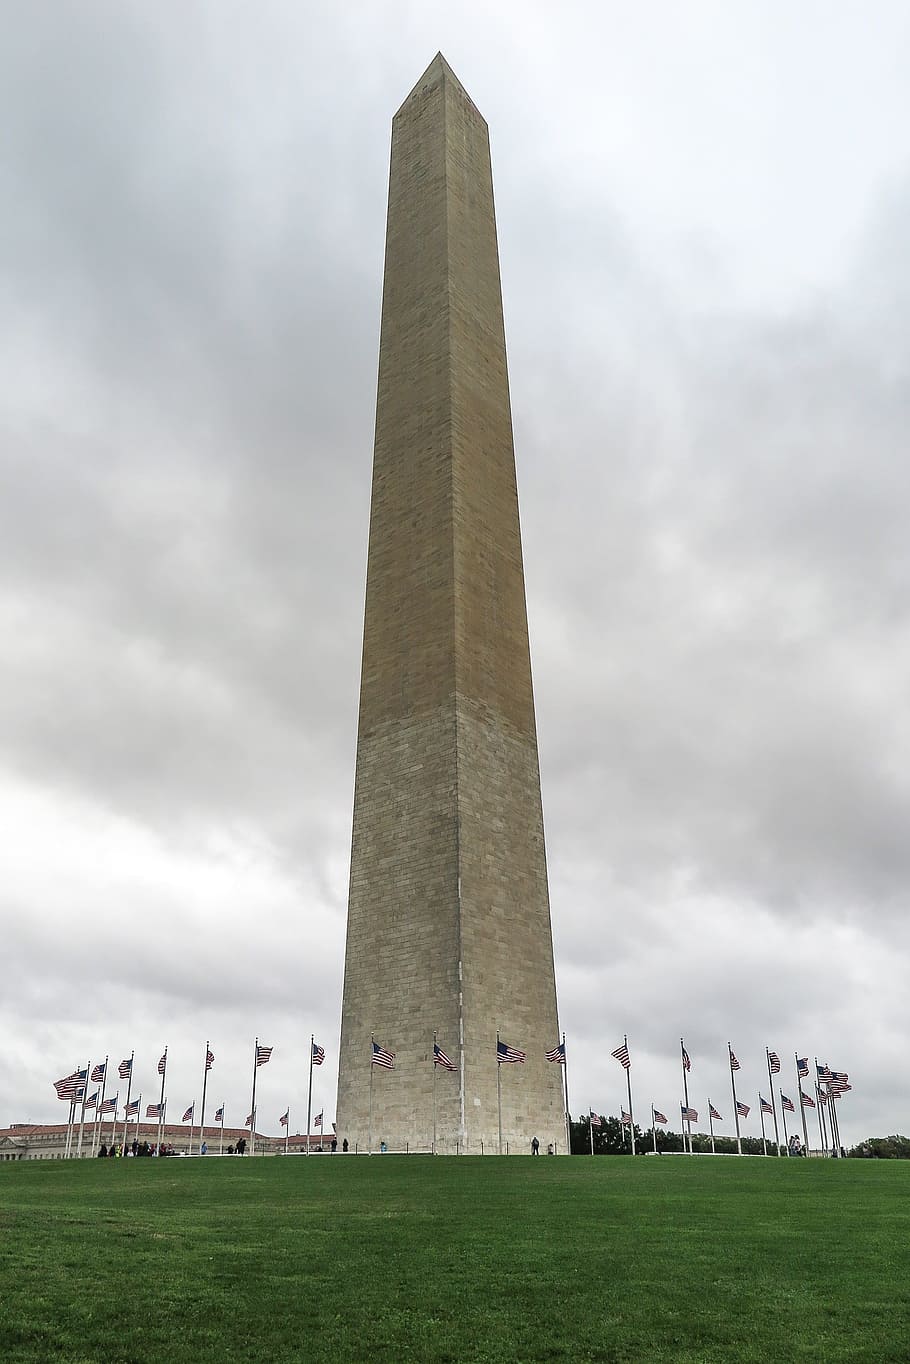 The white obelisk of the Washington Monument on the US National Mall in Washington DC.